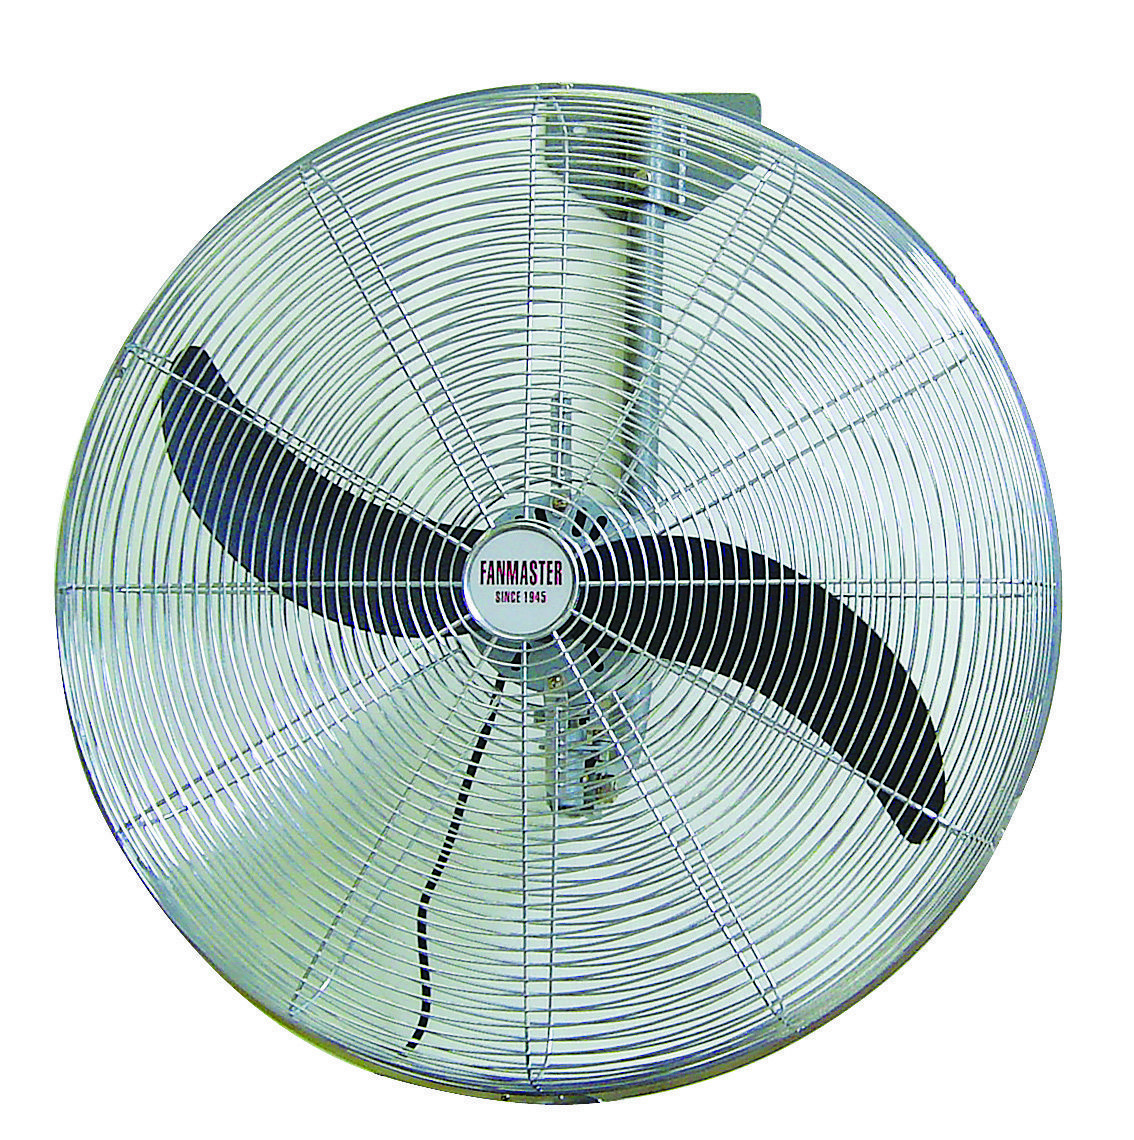 WALL MT FAN 650MM 240V 3SPD / Industrial Heating Cooling Ventilation Distribution Fans Warehouse Australia / Fanmaster